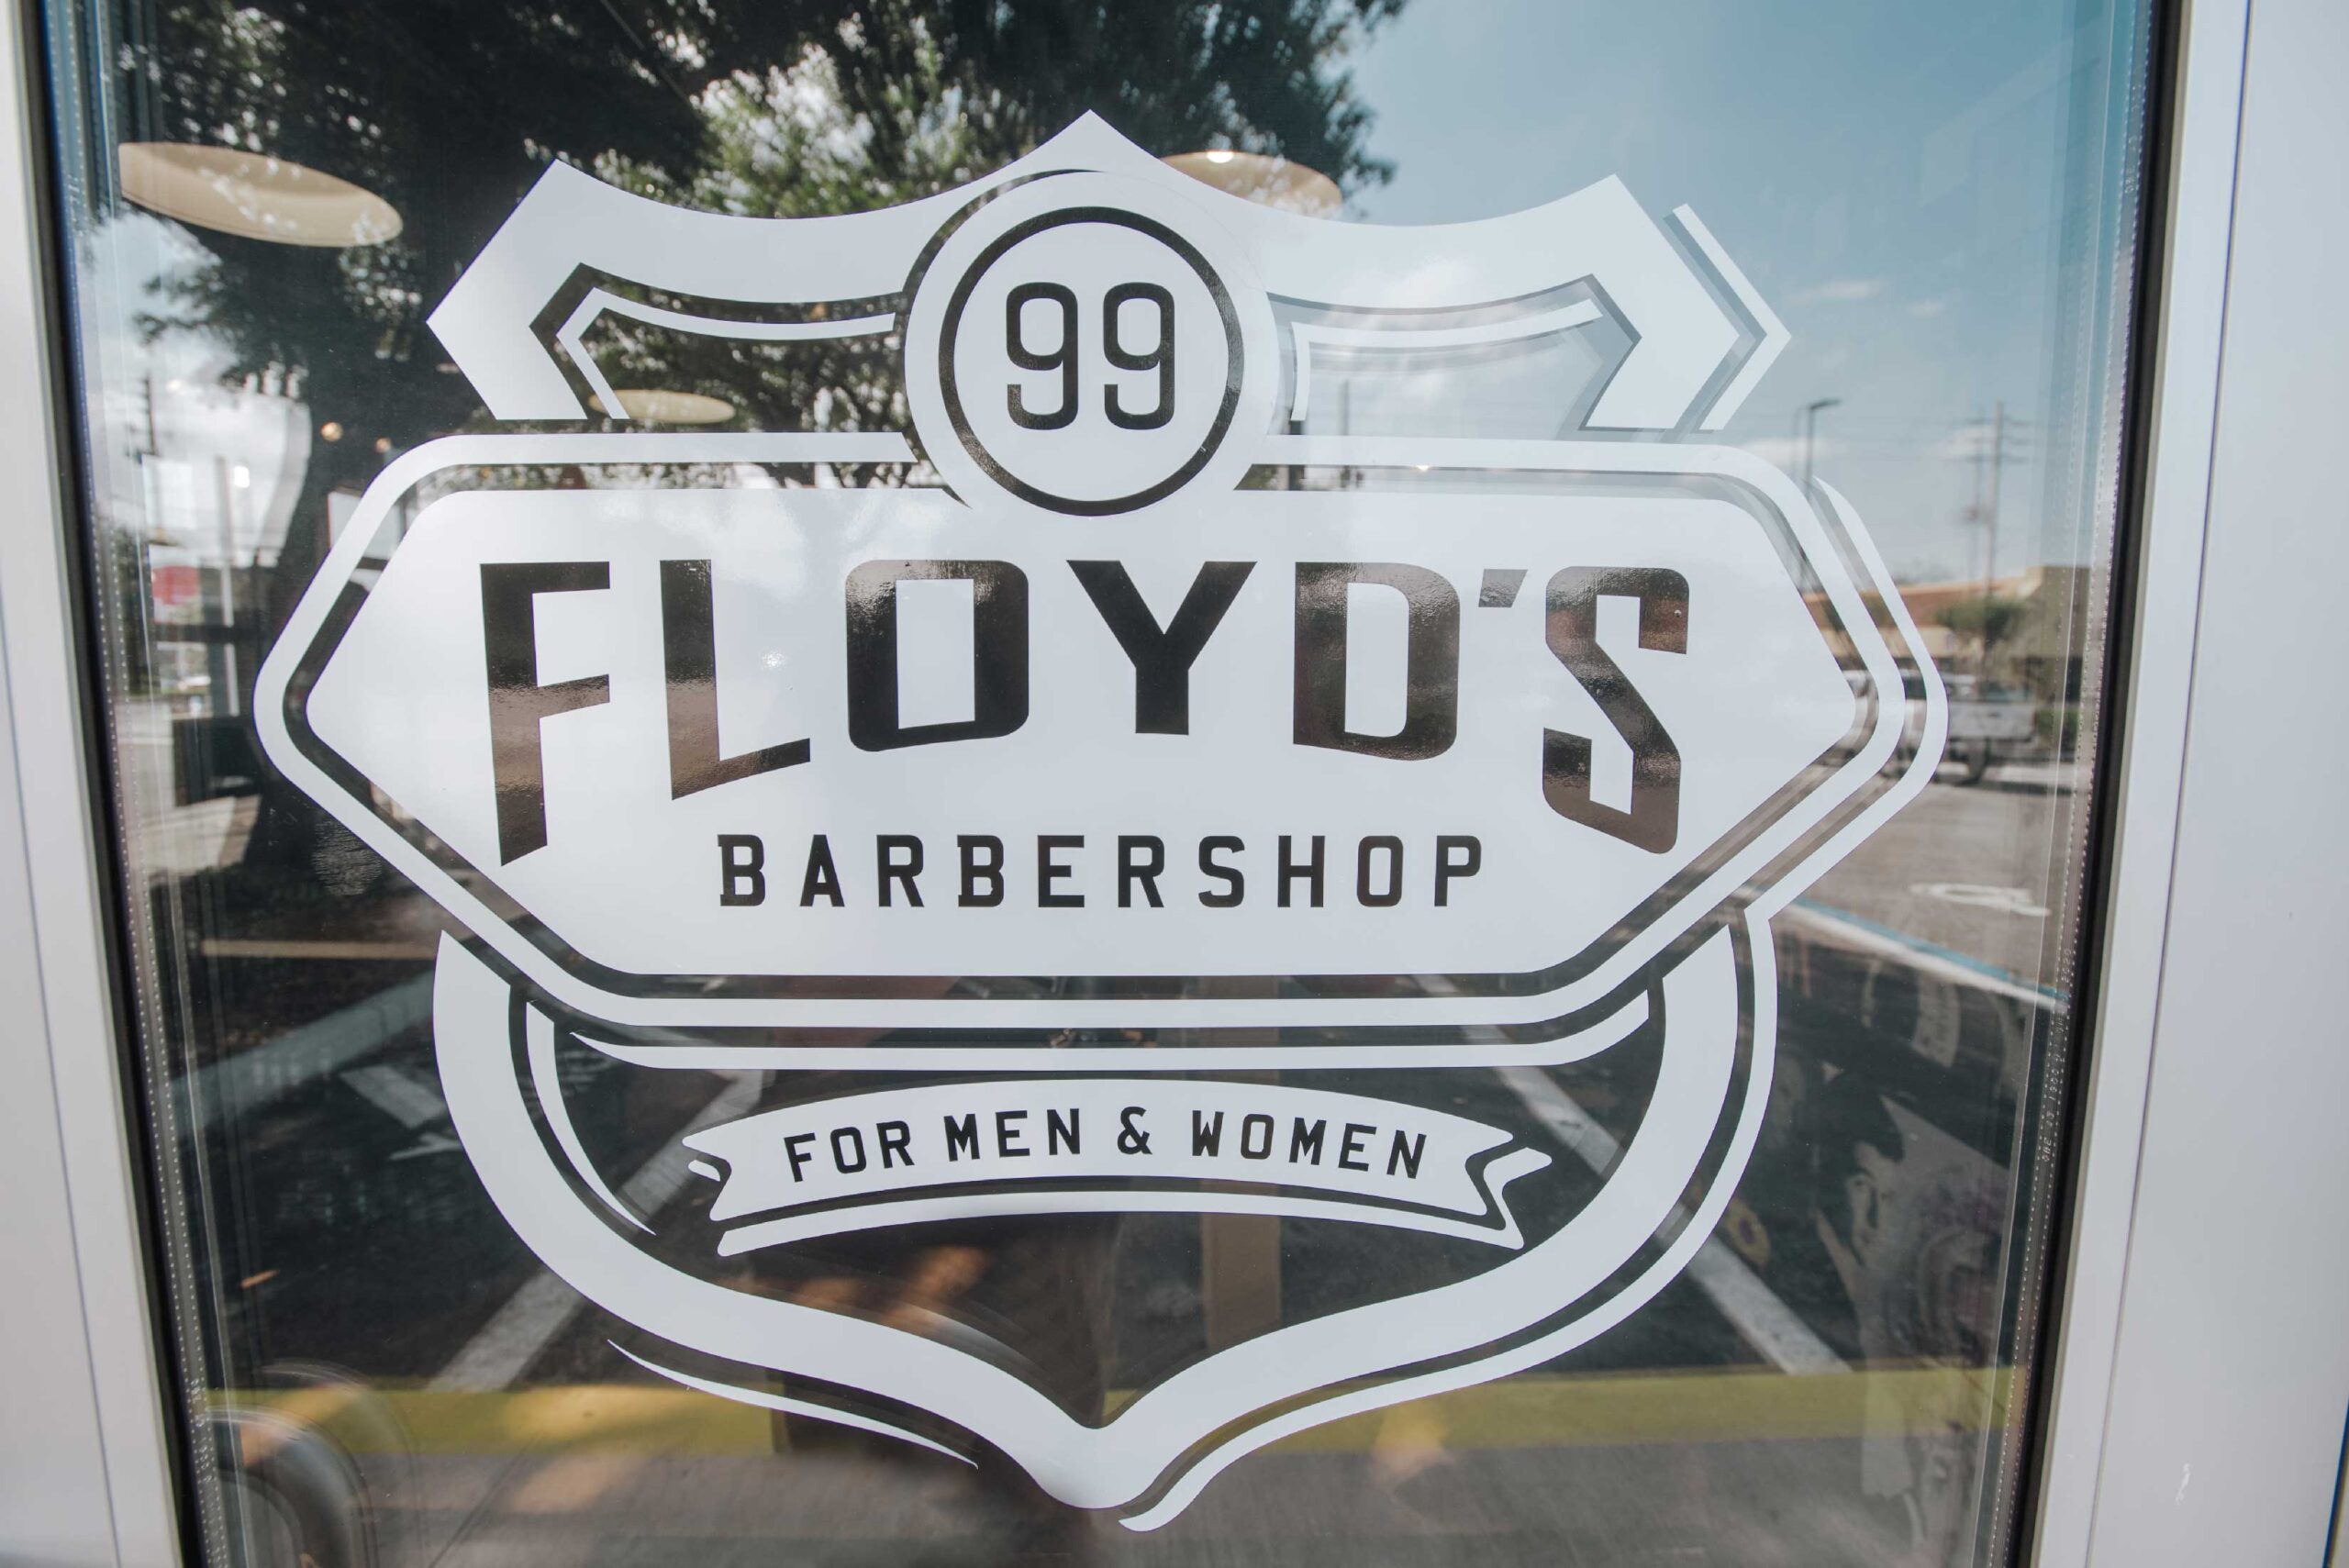 Floyd's Barbershop logo decal on glass